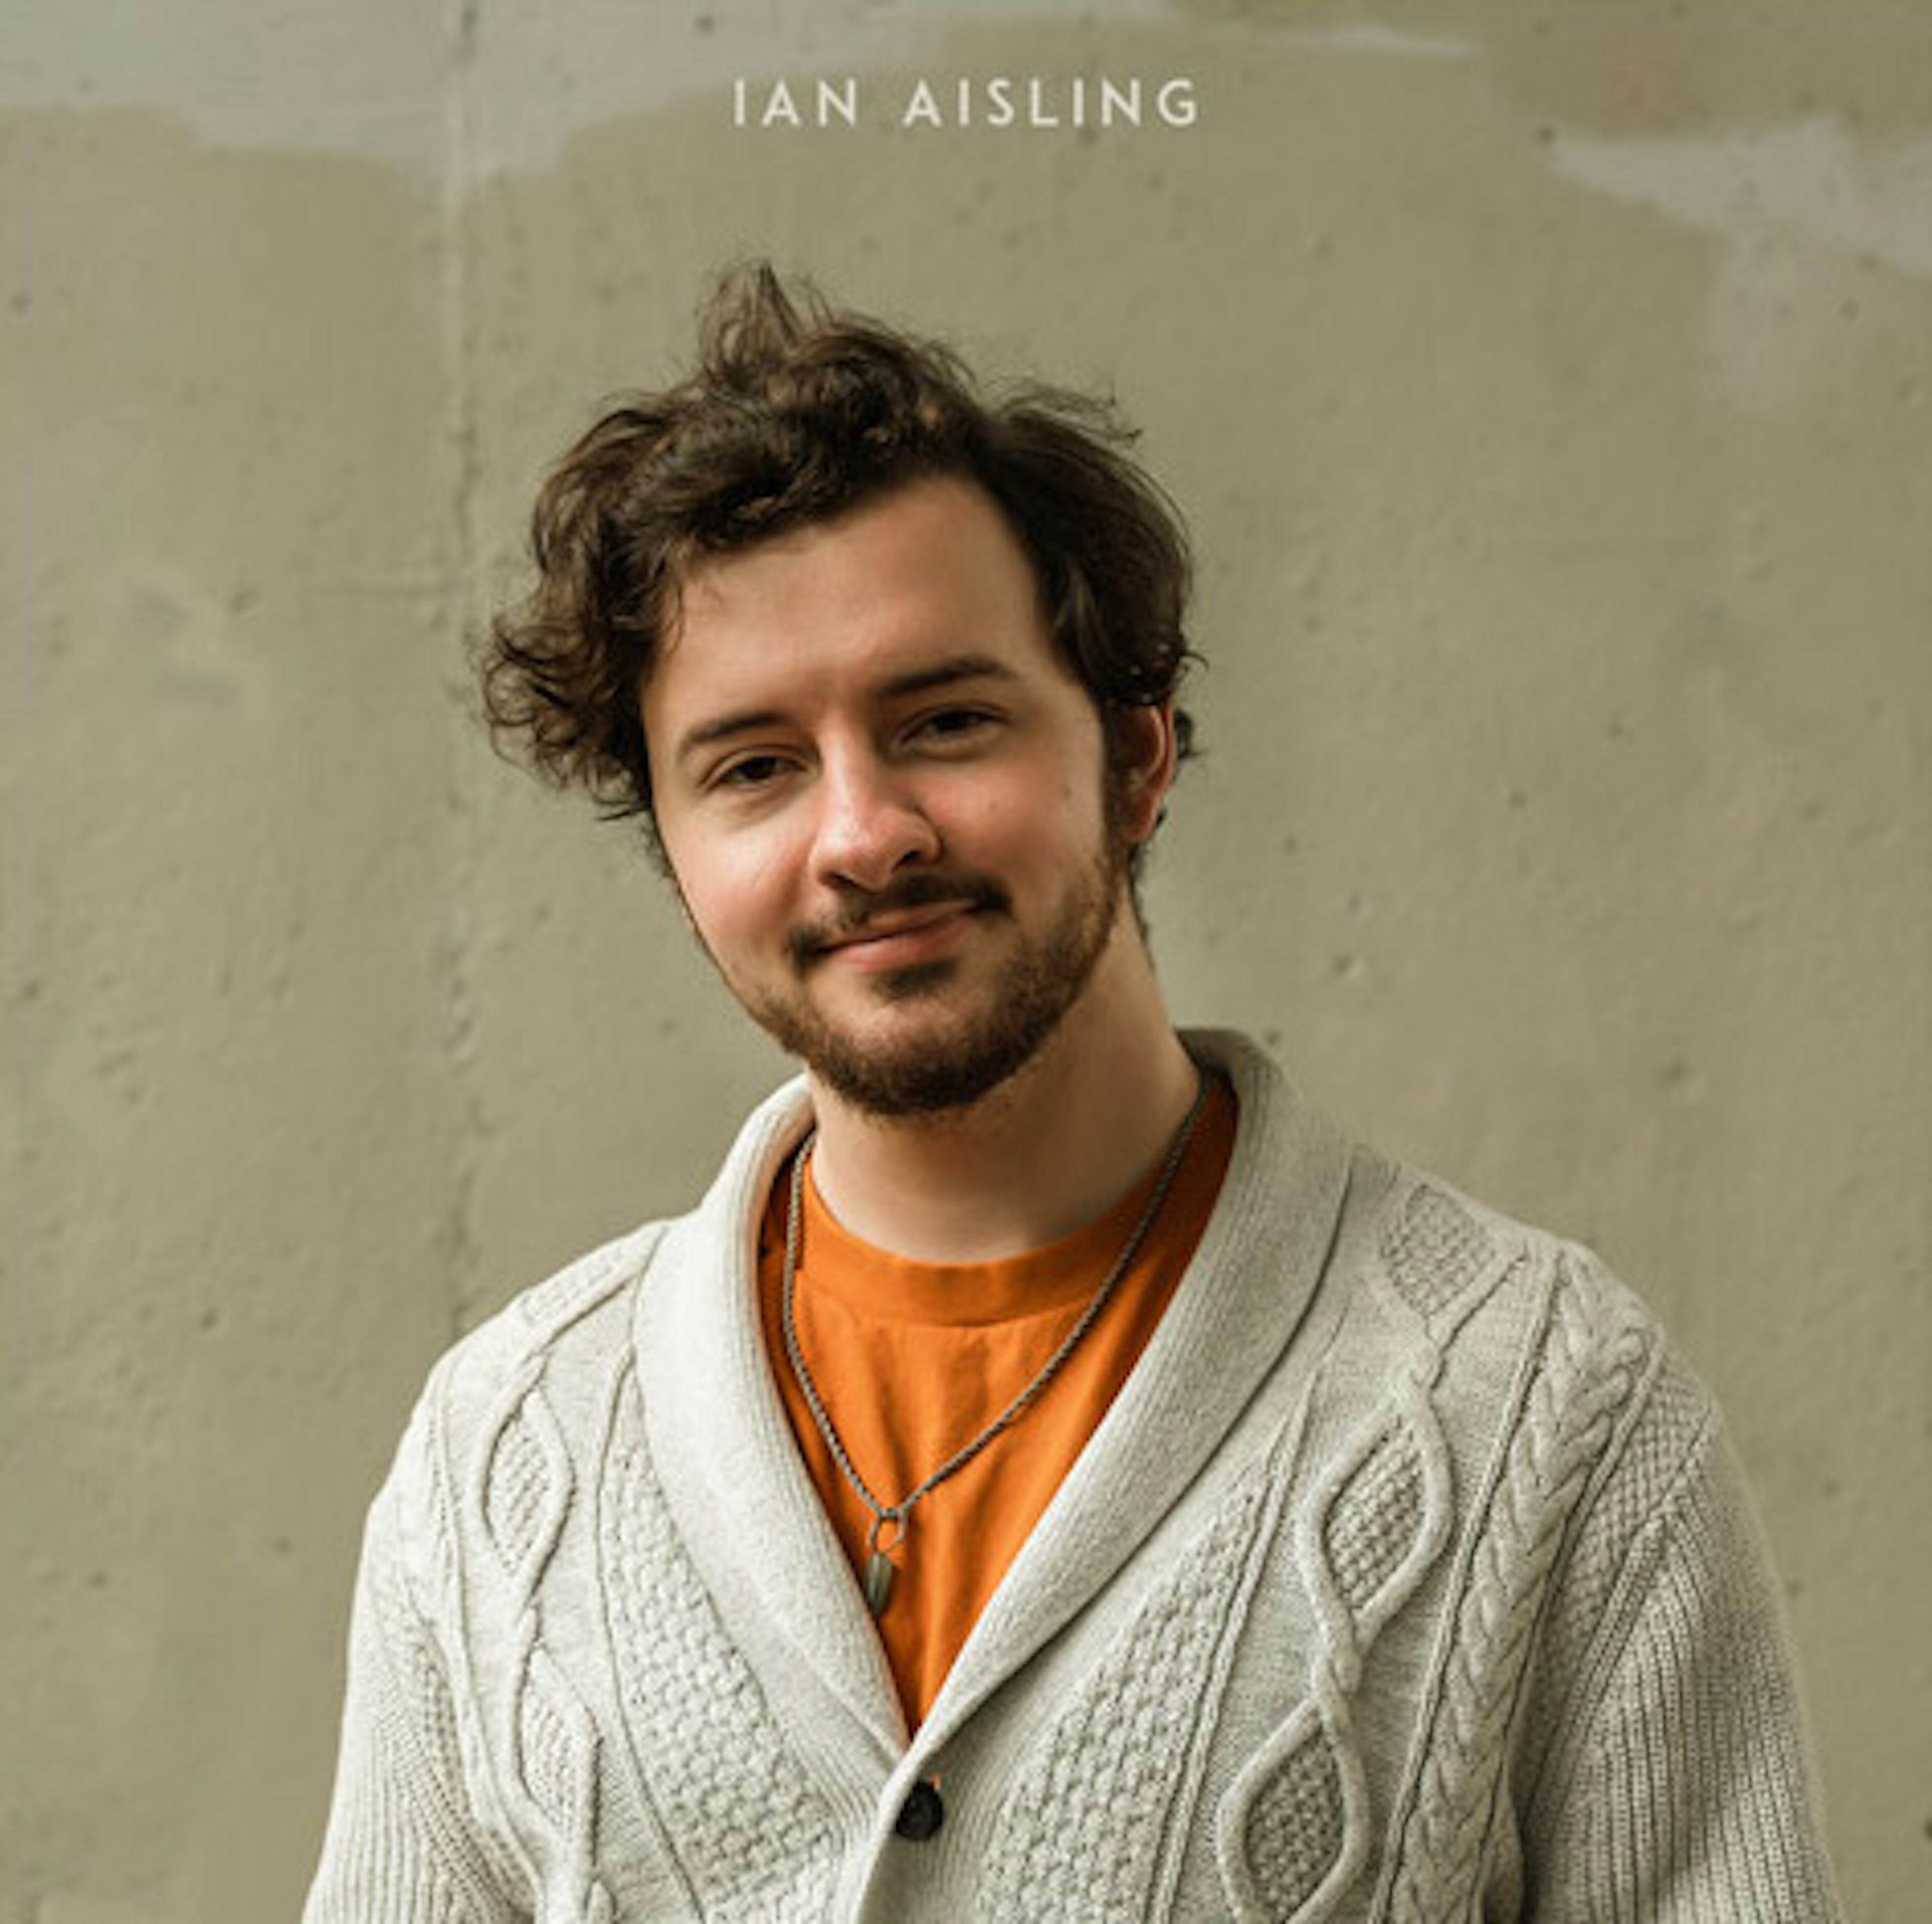 Ian Aisling